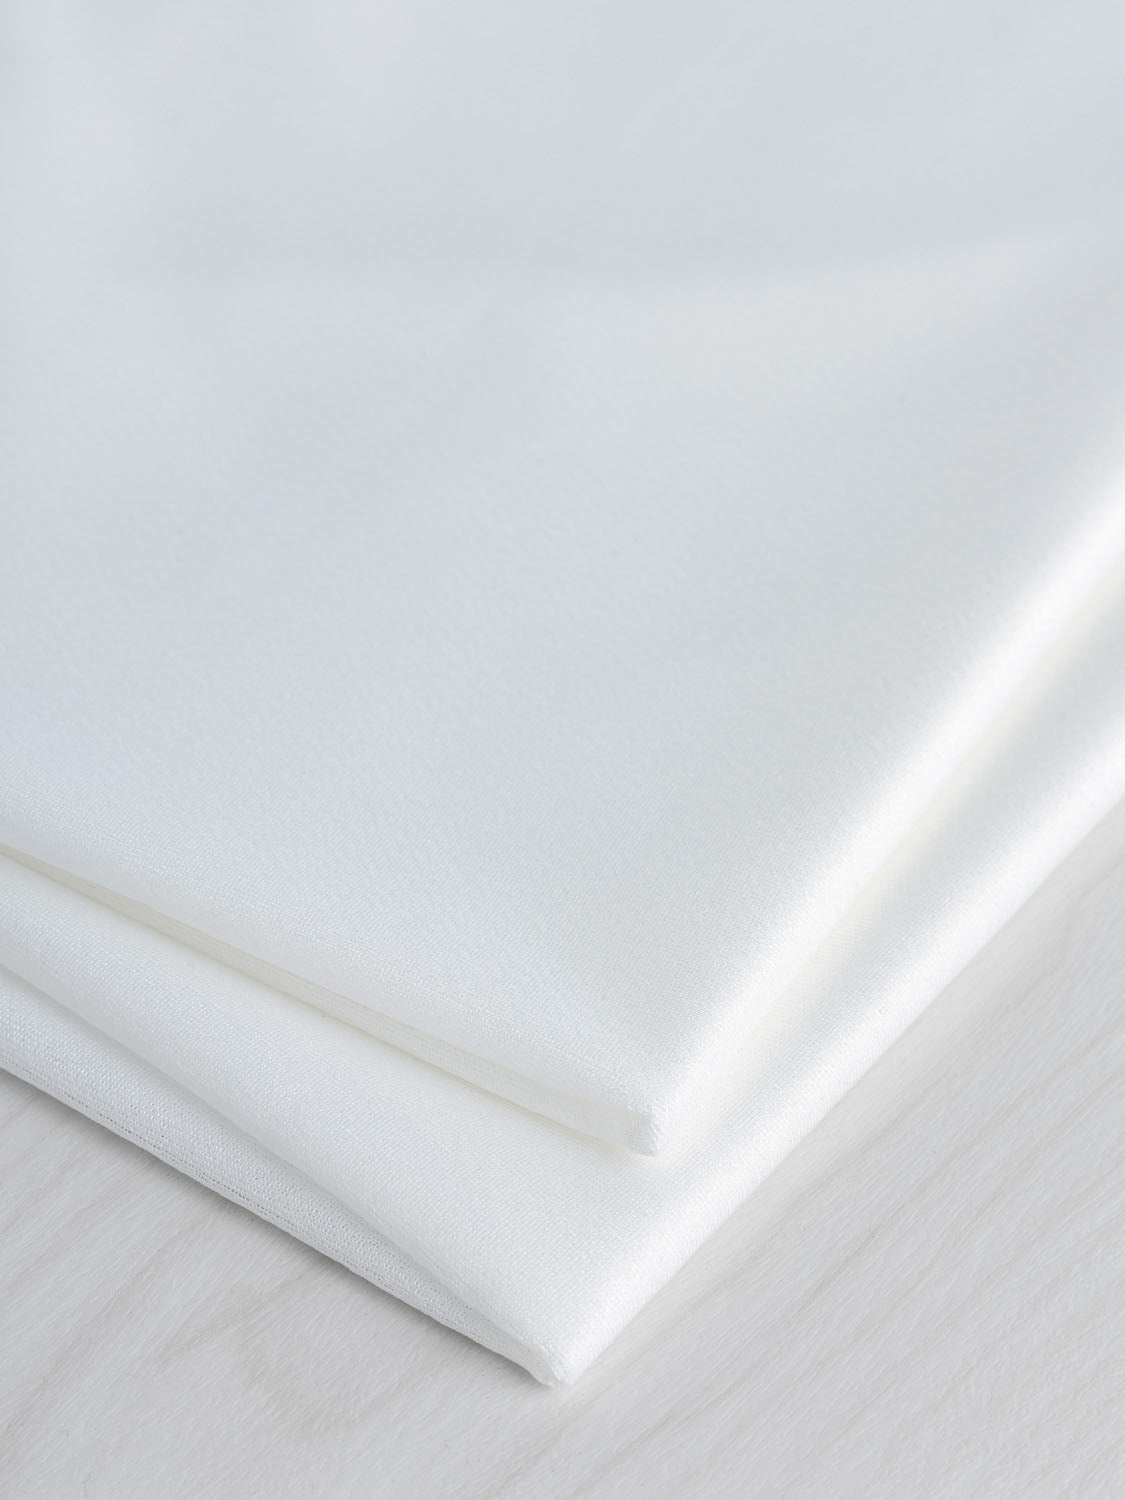 Lightweight Woven Interfacing - White | Core Fabrics